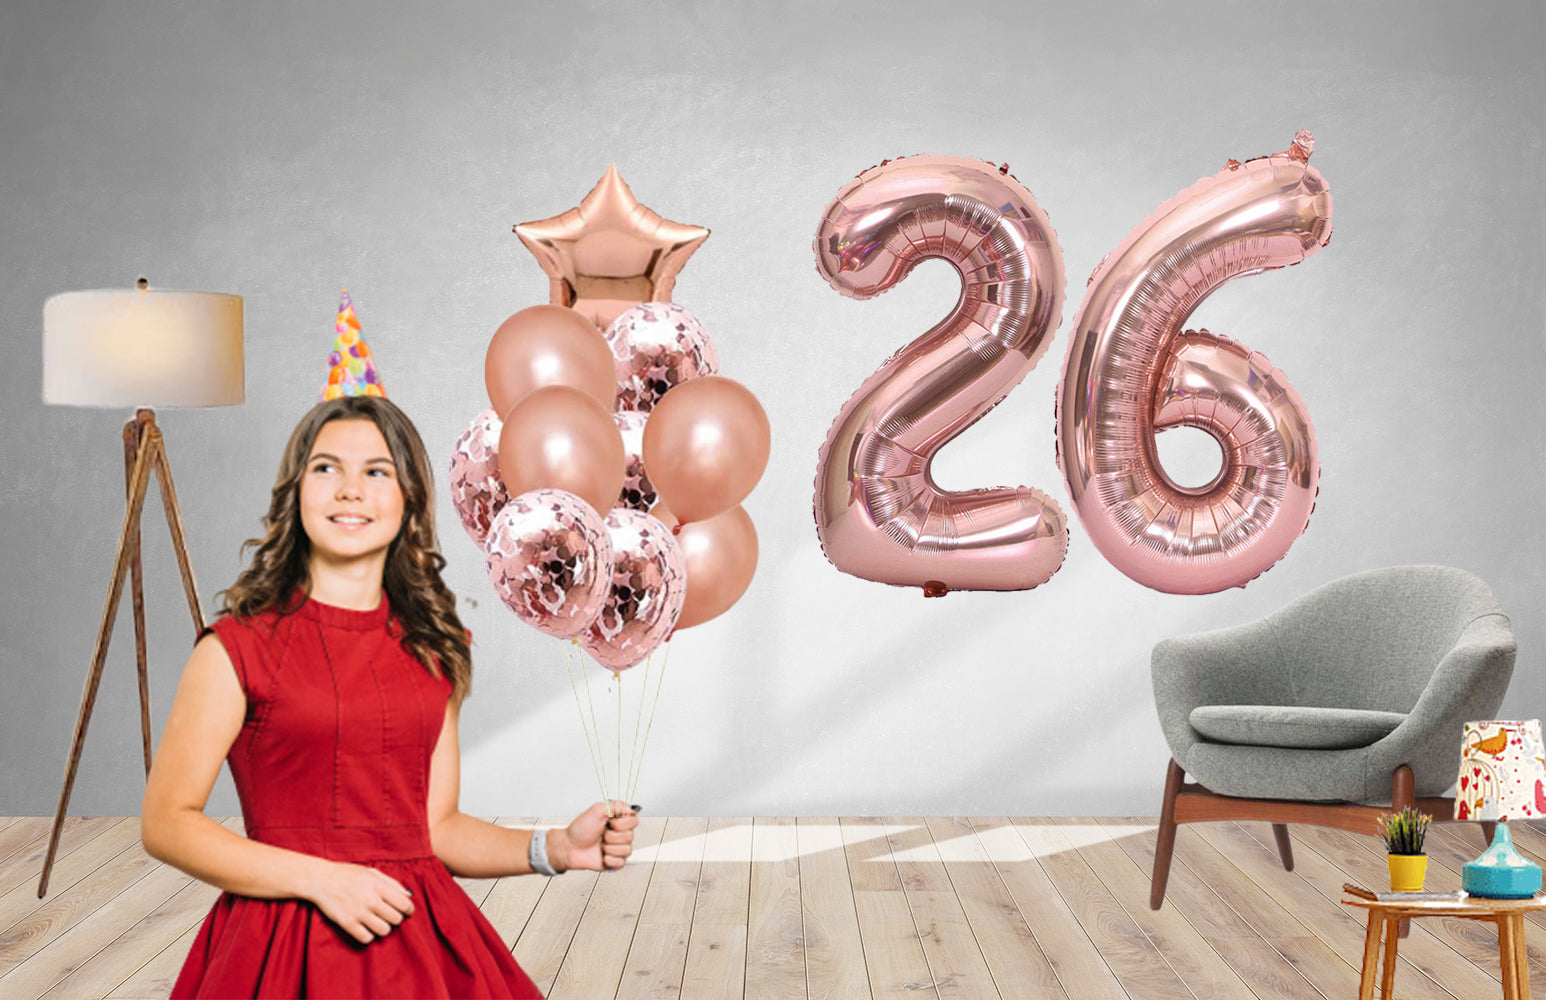 14 Pcs DIY Happy Birthday Kit – Rose Gold 26 Number 40 Inches Foil Balloon-Rose Gold Metallic Balloons-Rose Gold Confetti Balloons-Rose Gold Star foil